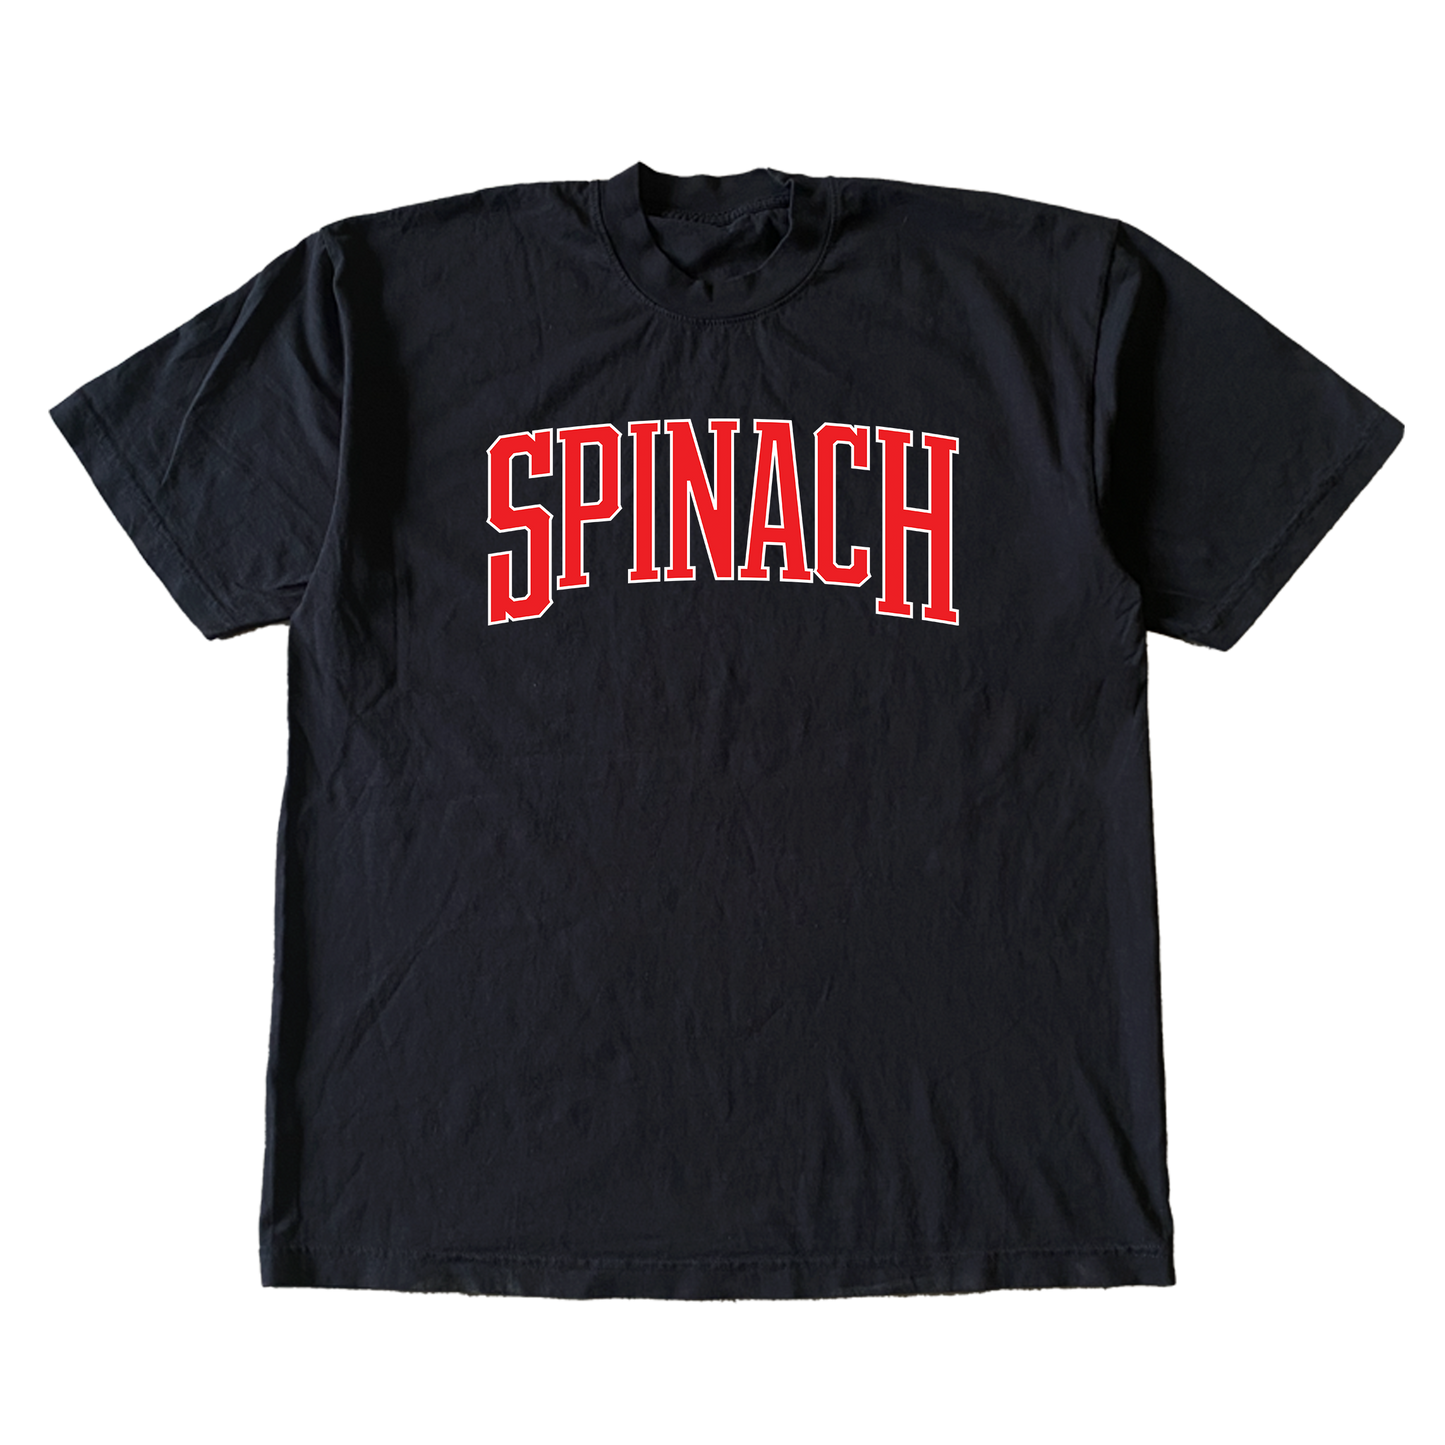 Spinach Collegiate v1 Tee